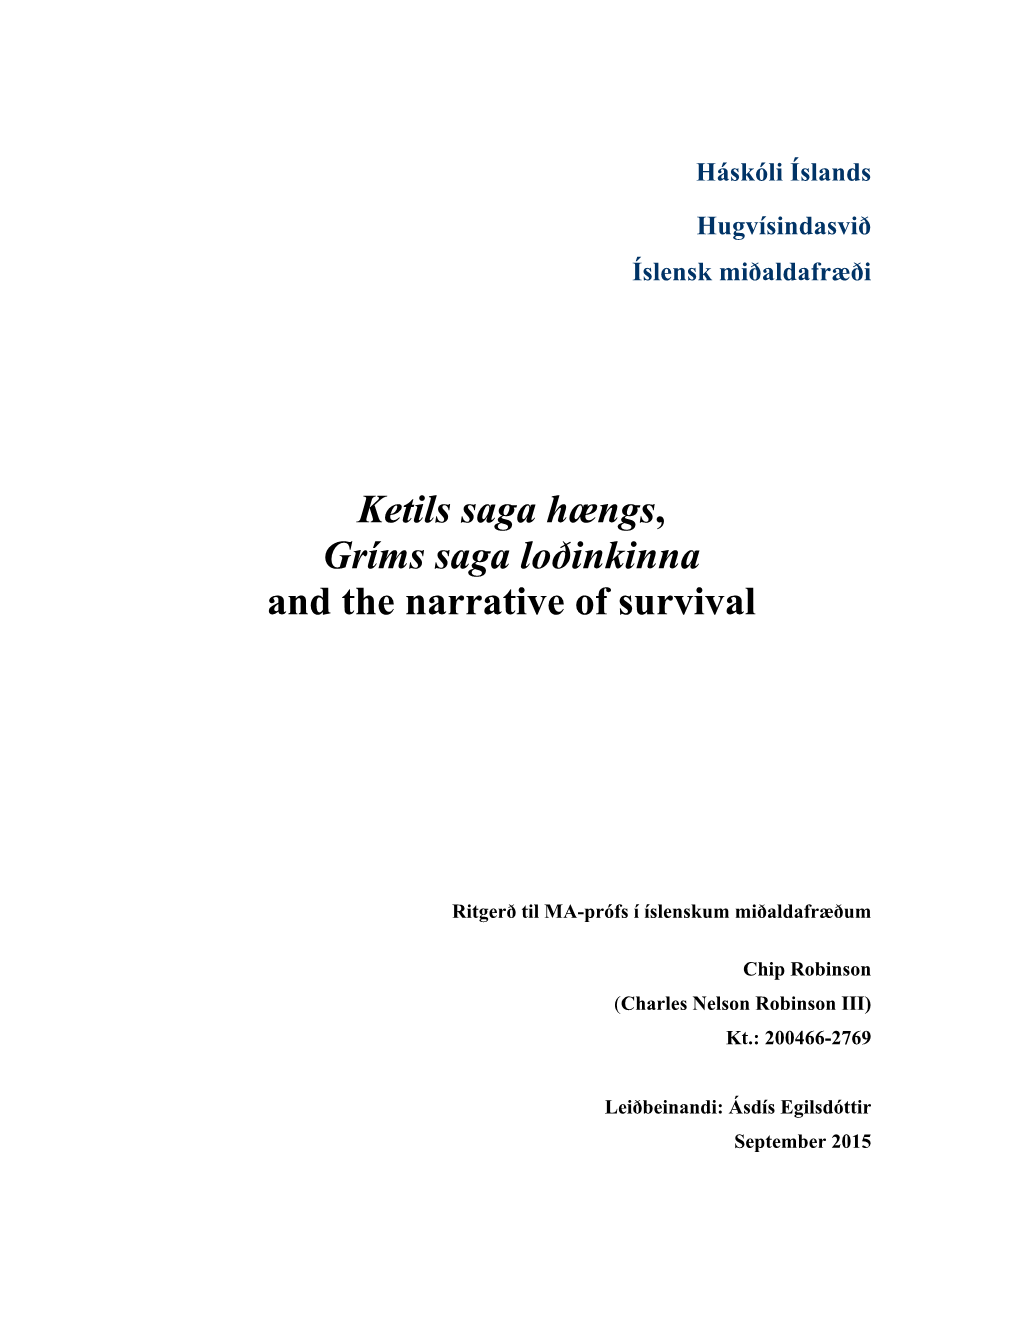 Ketils Saga Hængs, Gríms Saga Loðinkinna and the Narrative of Survival